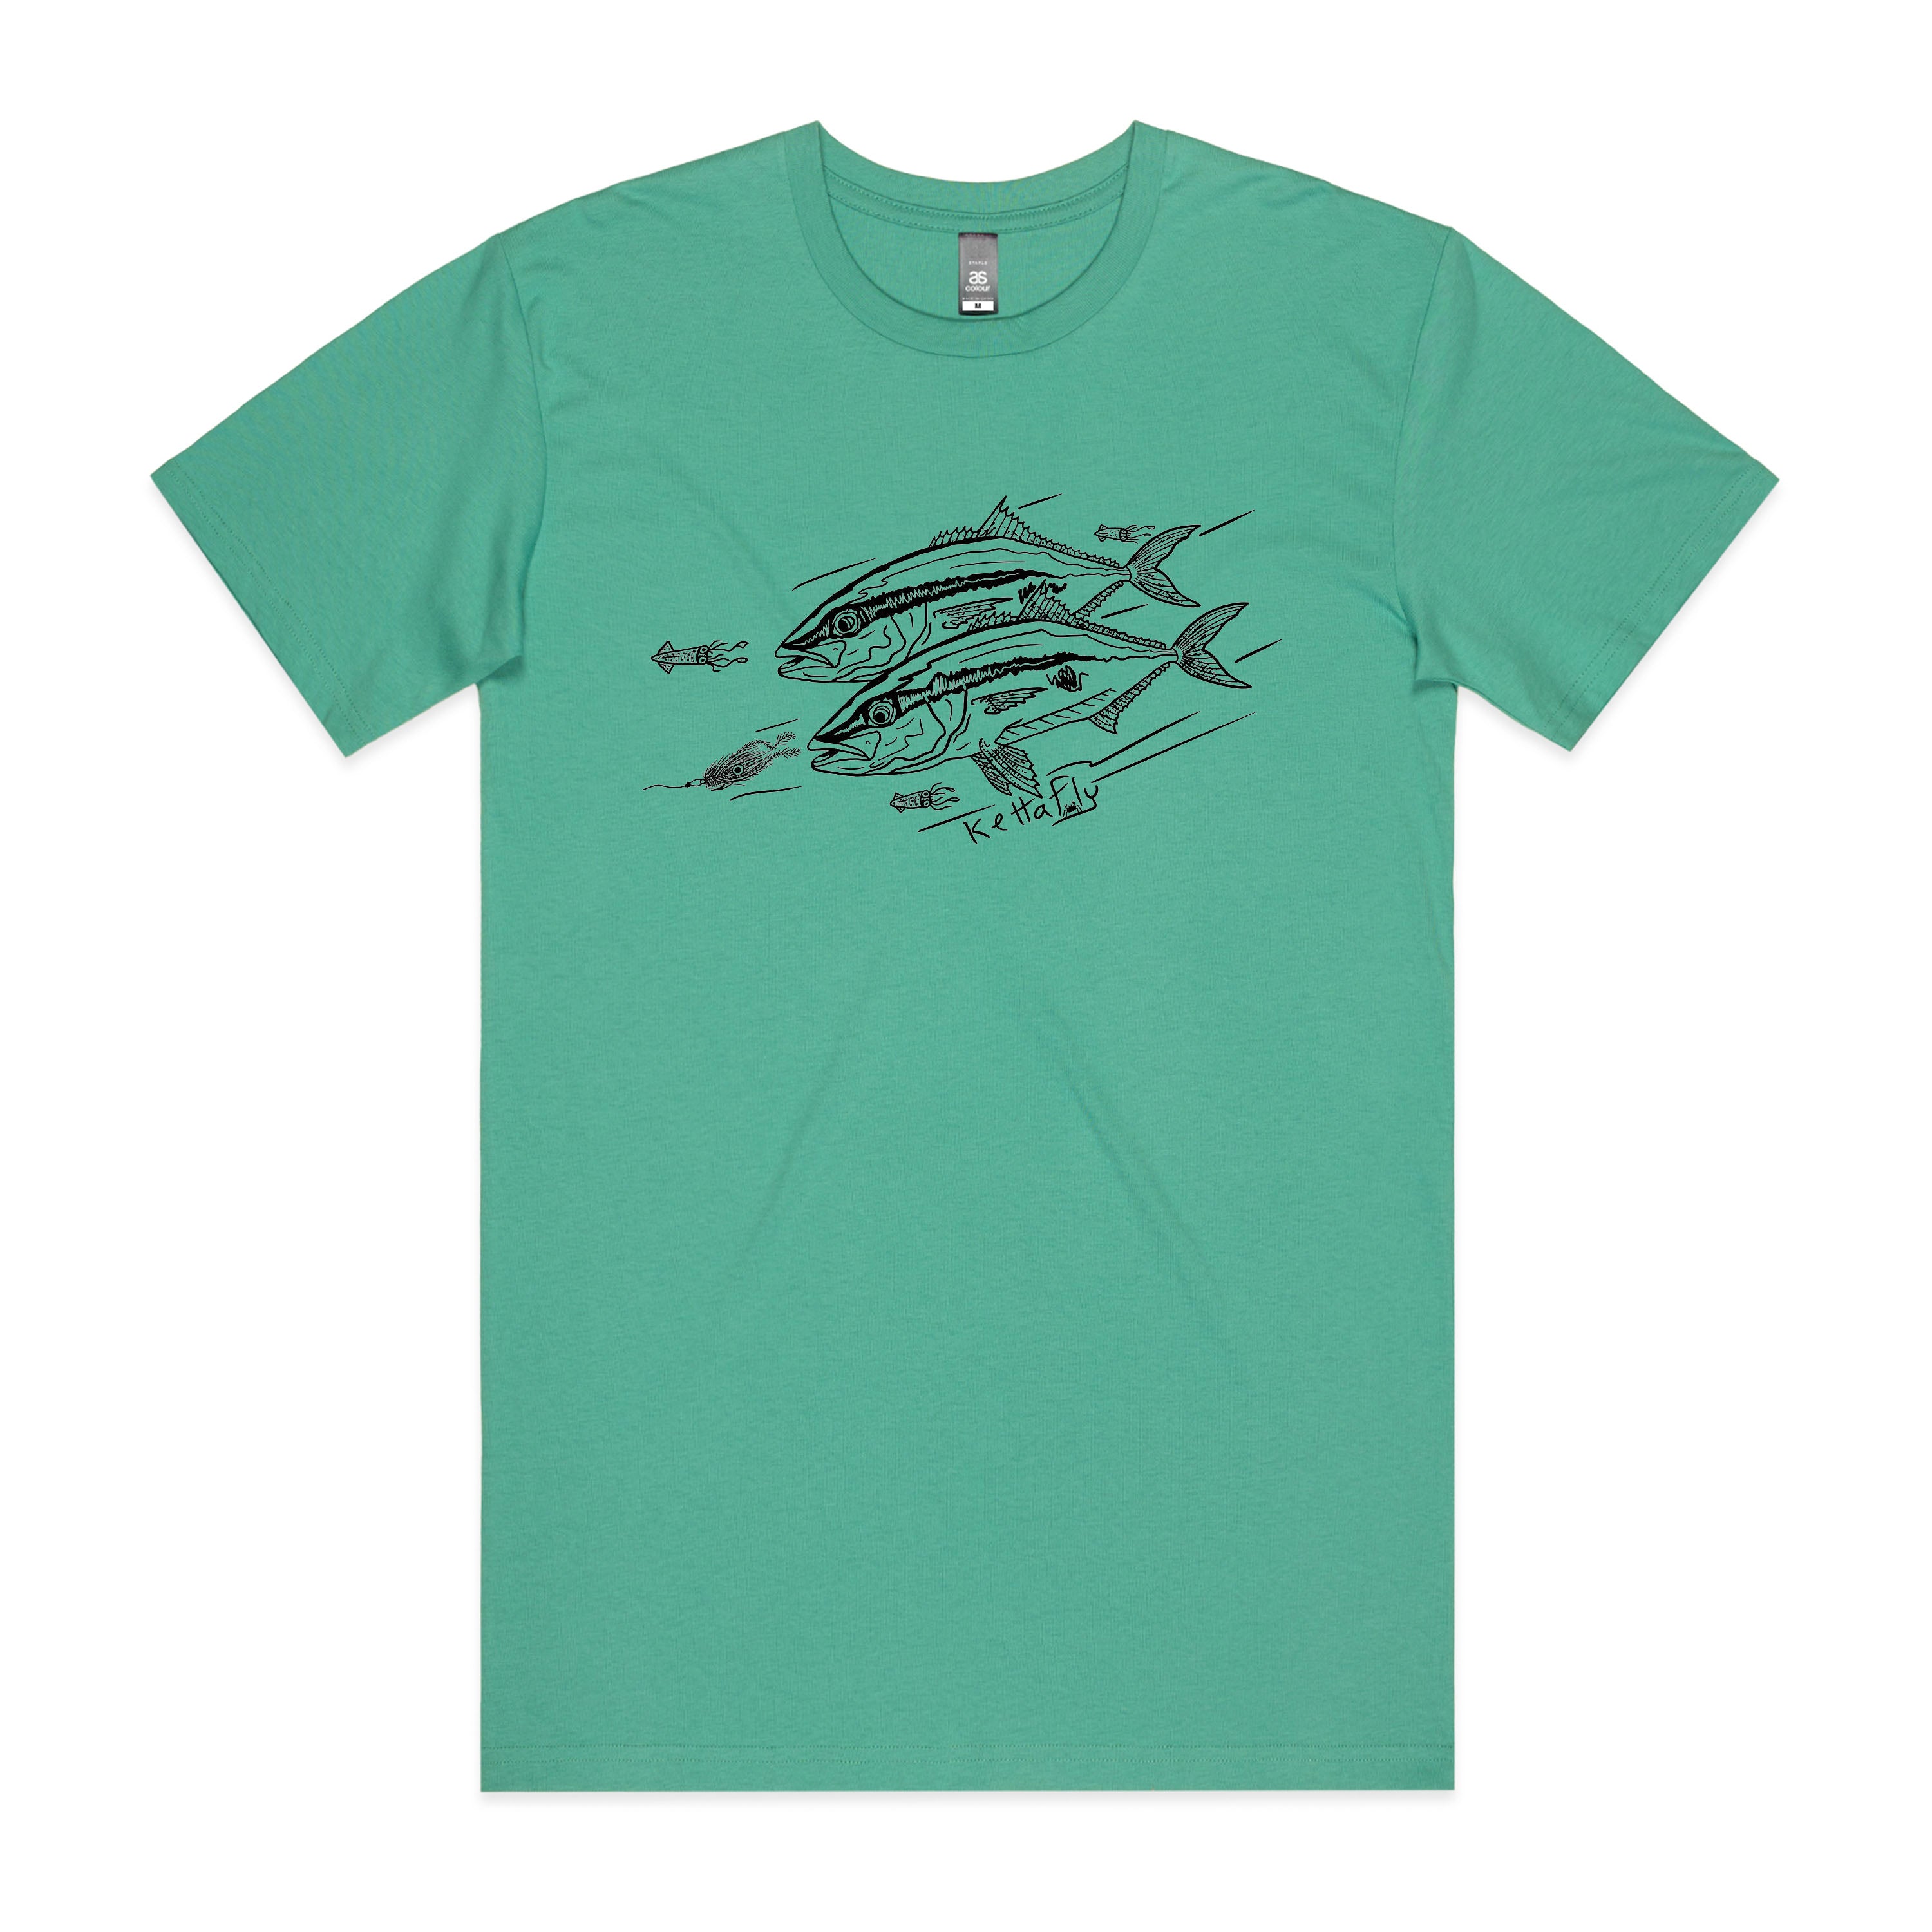 Kingfish Design (front) T-Shirt Short Sleeve